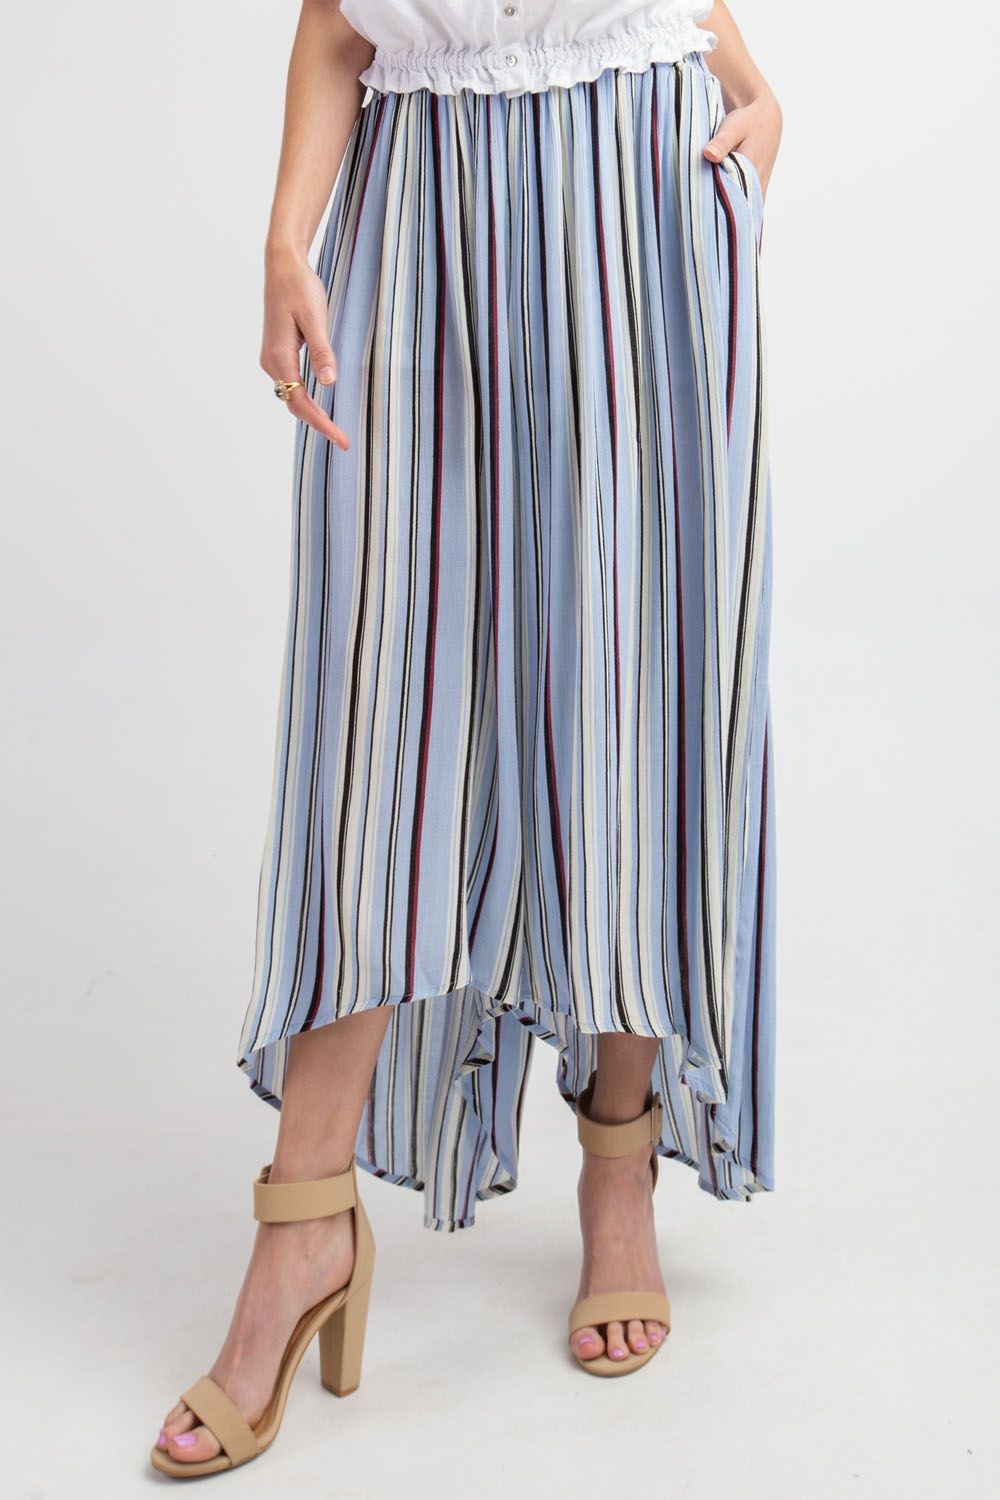 Buy Easel Elastic Waistband Stripe Printed Rayon Gauze Ruffle Pants by Sensual Fashion Boutique by Sensual Fashion Boutique